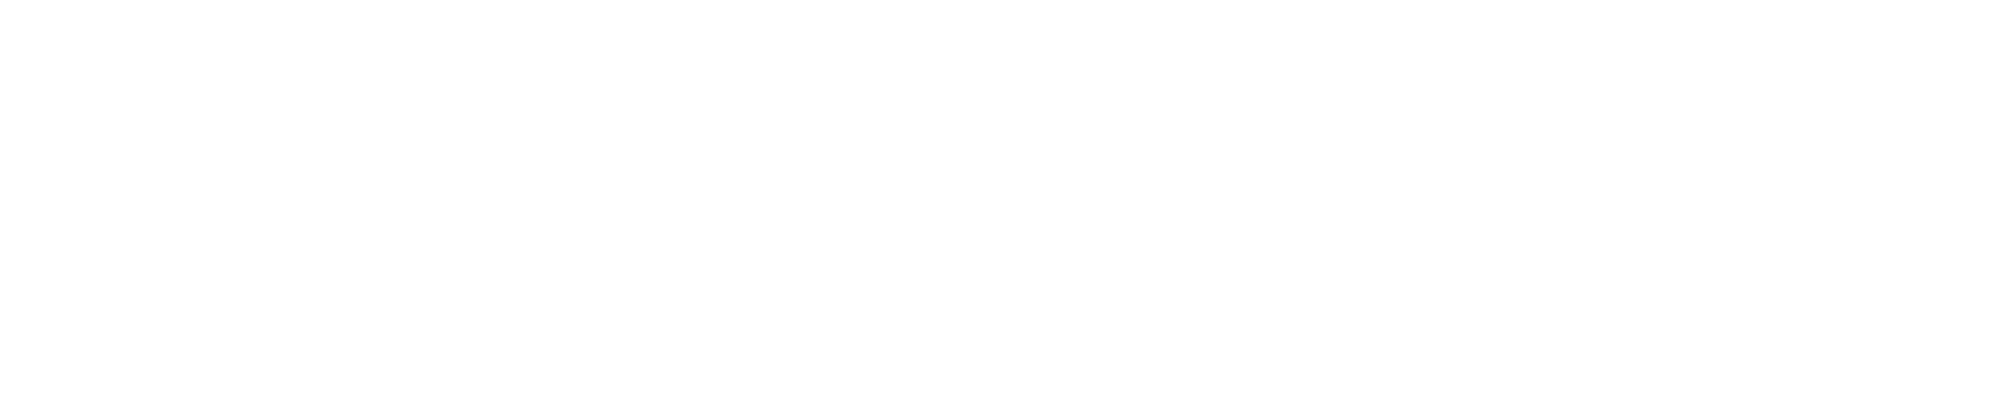 Manly Bands logo